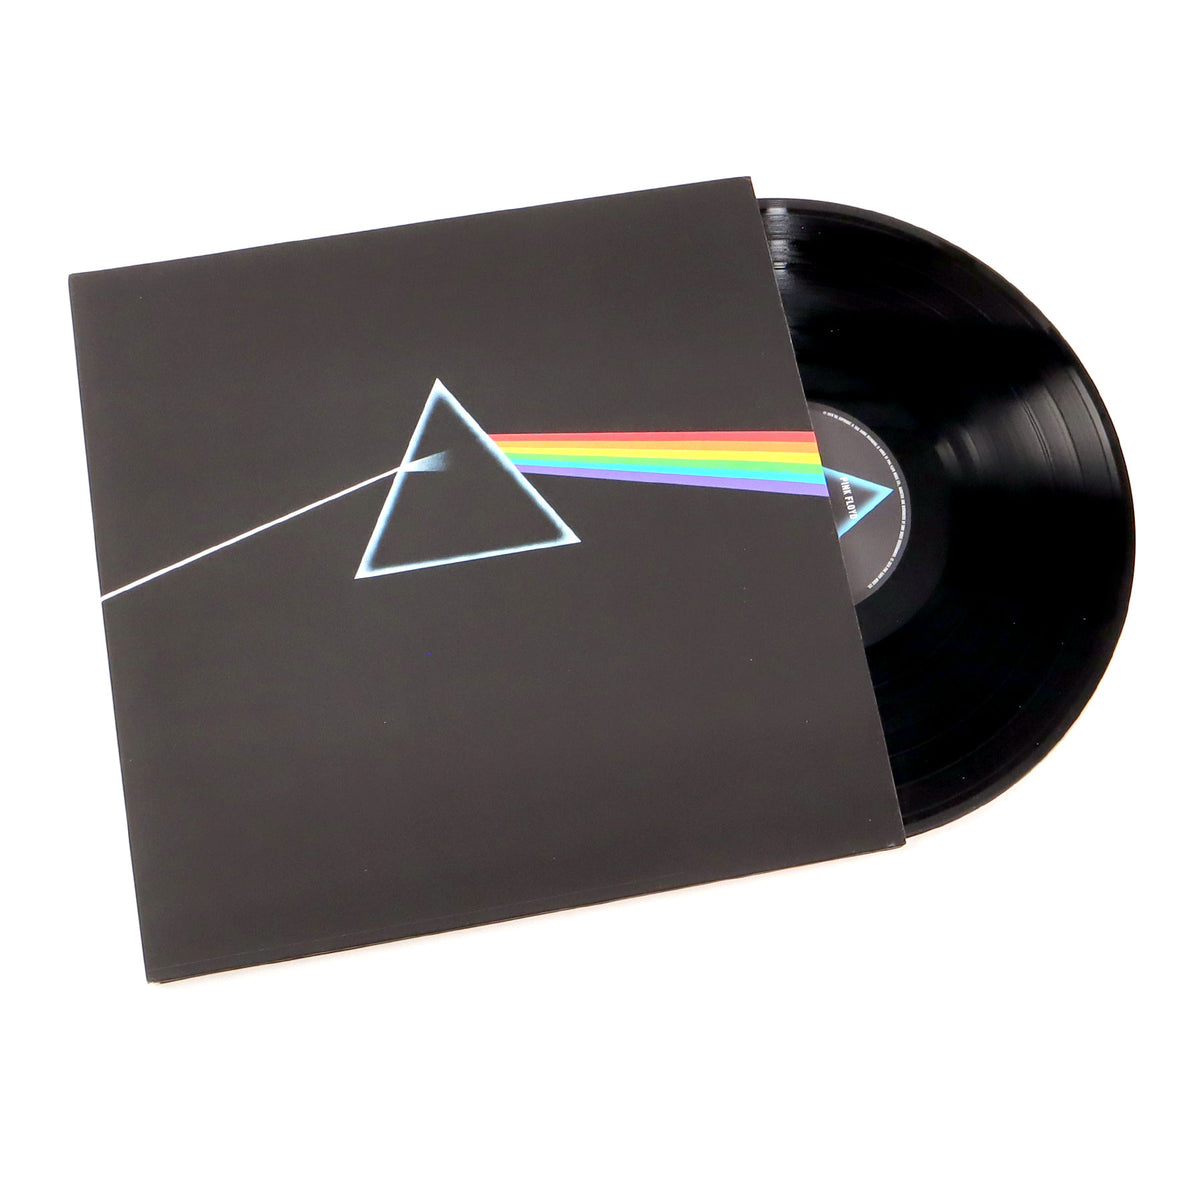 Lp moon. Dark Side of the Moon LP. Pink Floyd the Dark Side of the Moon LP. Pink Floyd Dark Side of the Moon LP купить.